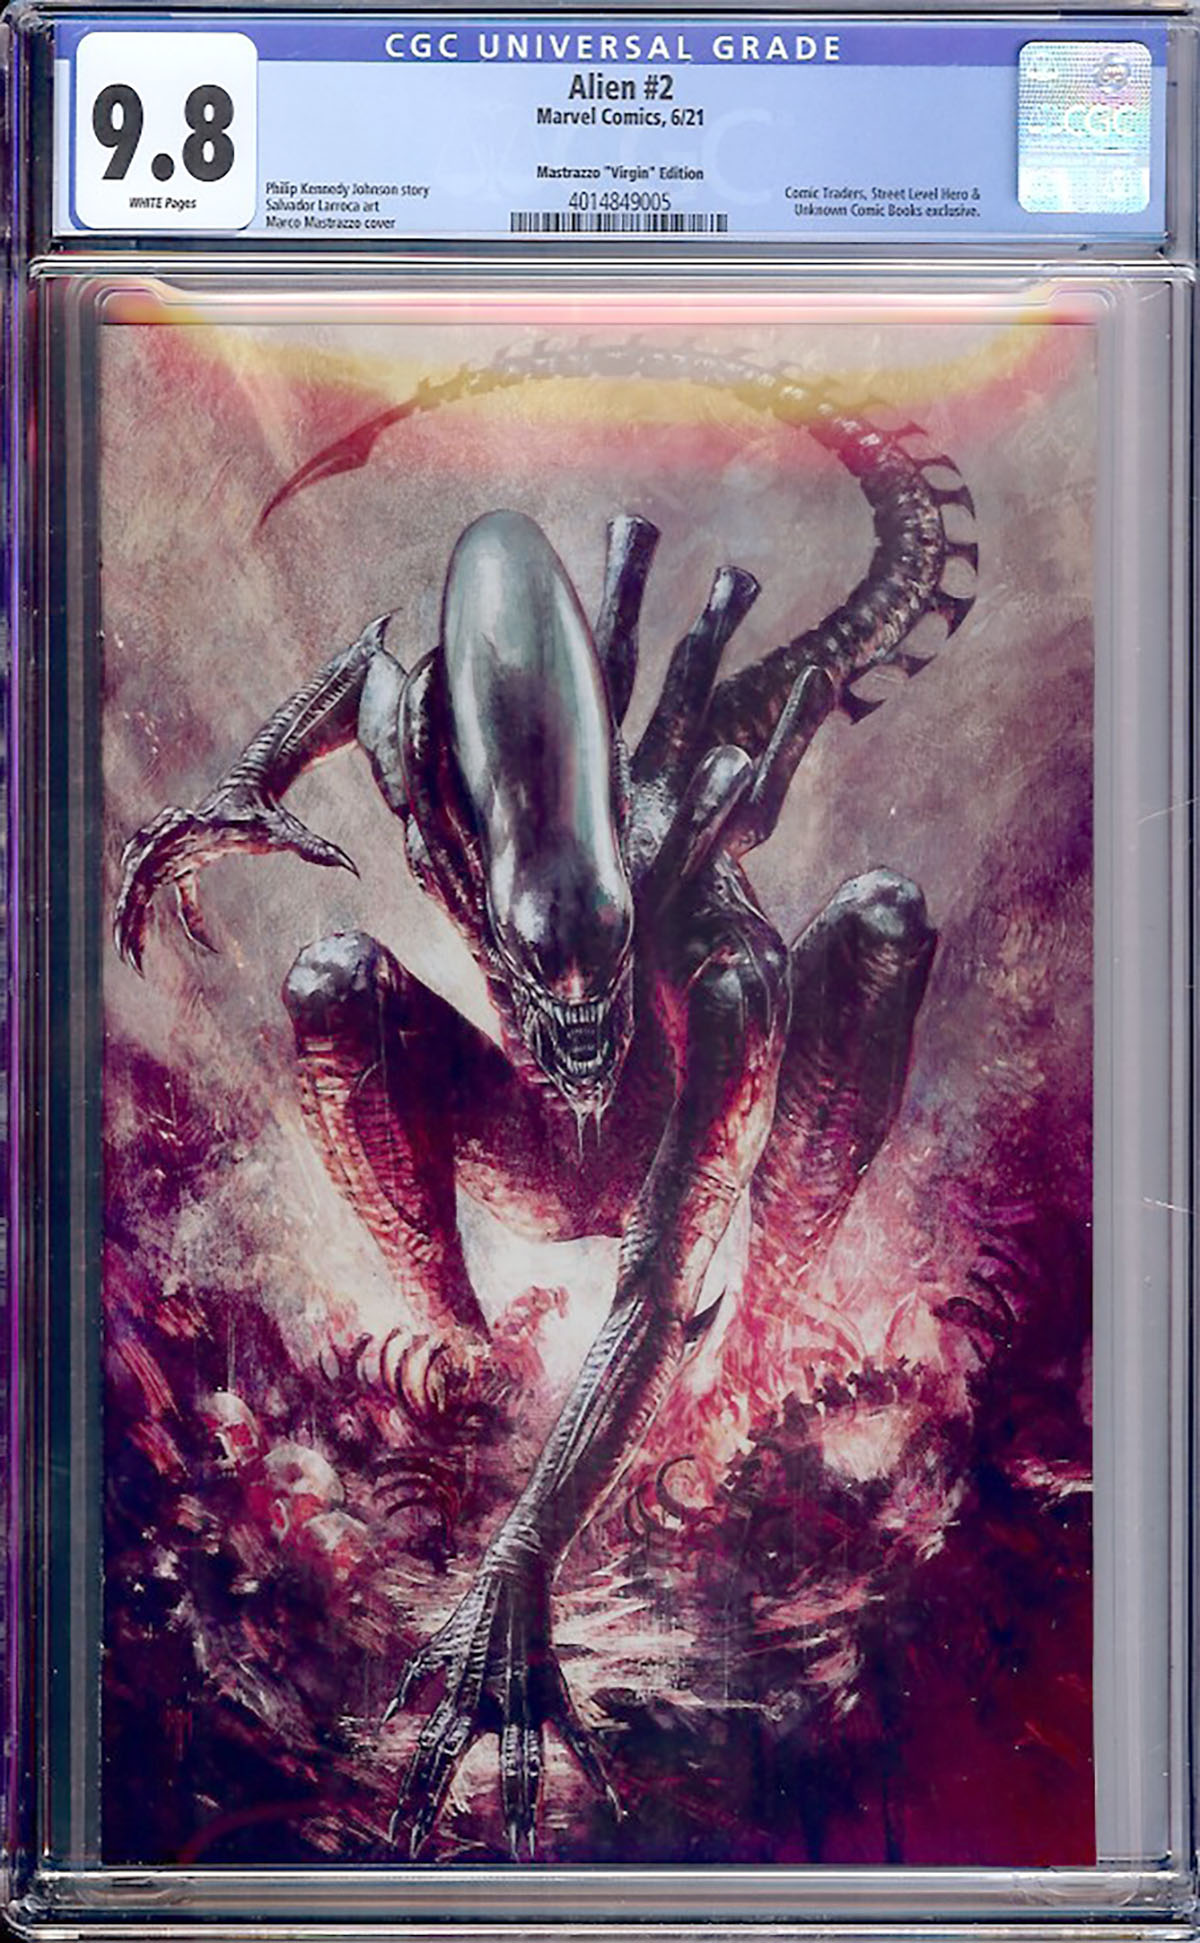 Alien #2 CGC 9.8 w Mastrazzo "Virgin" Edition